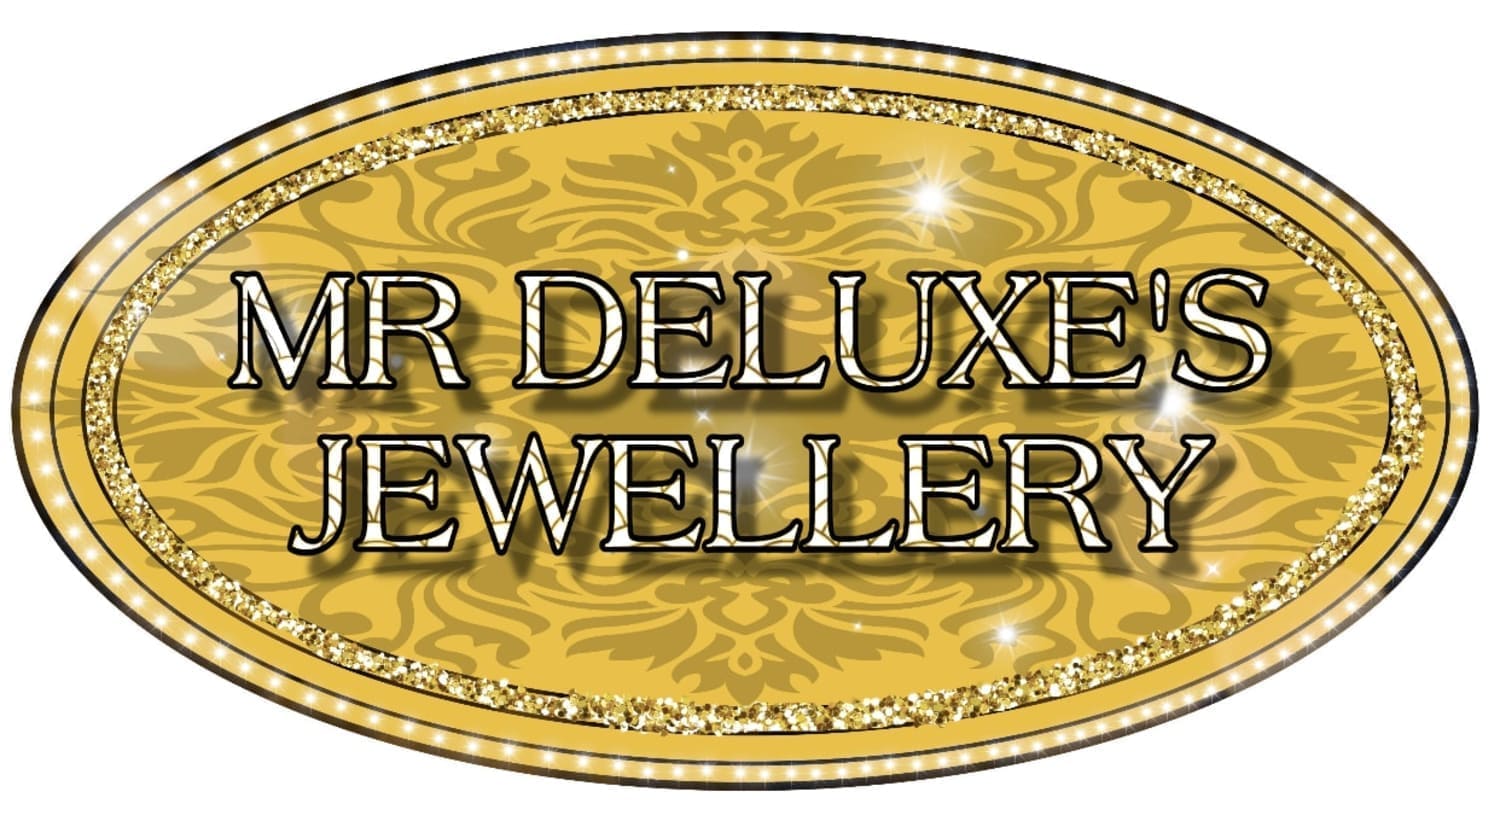 Mr Deluxe's Jewellery